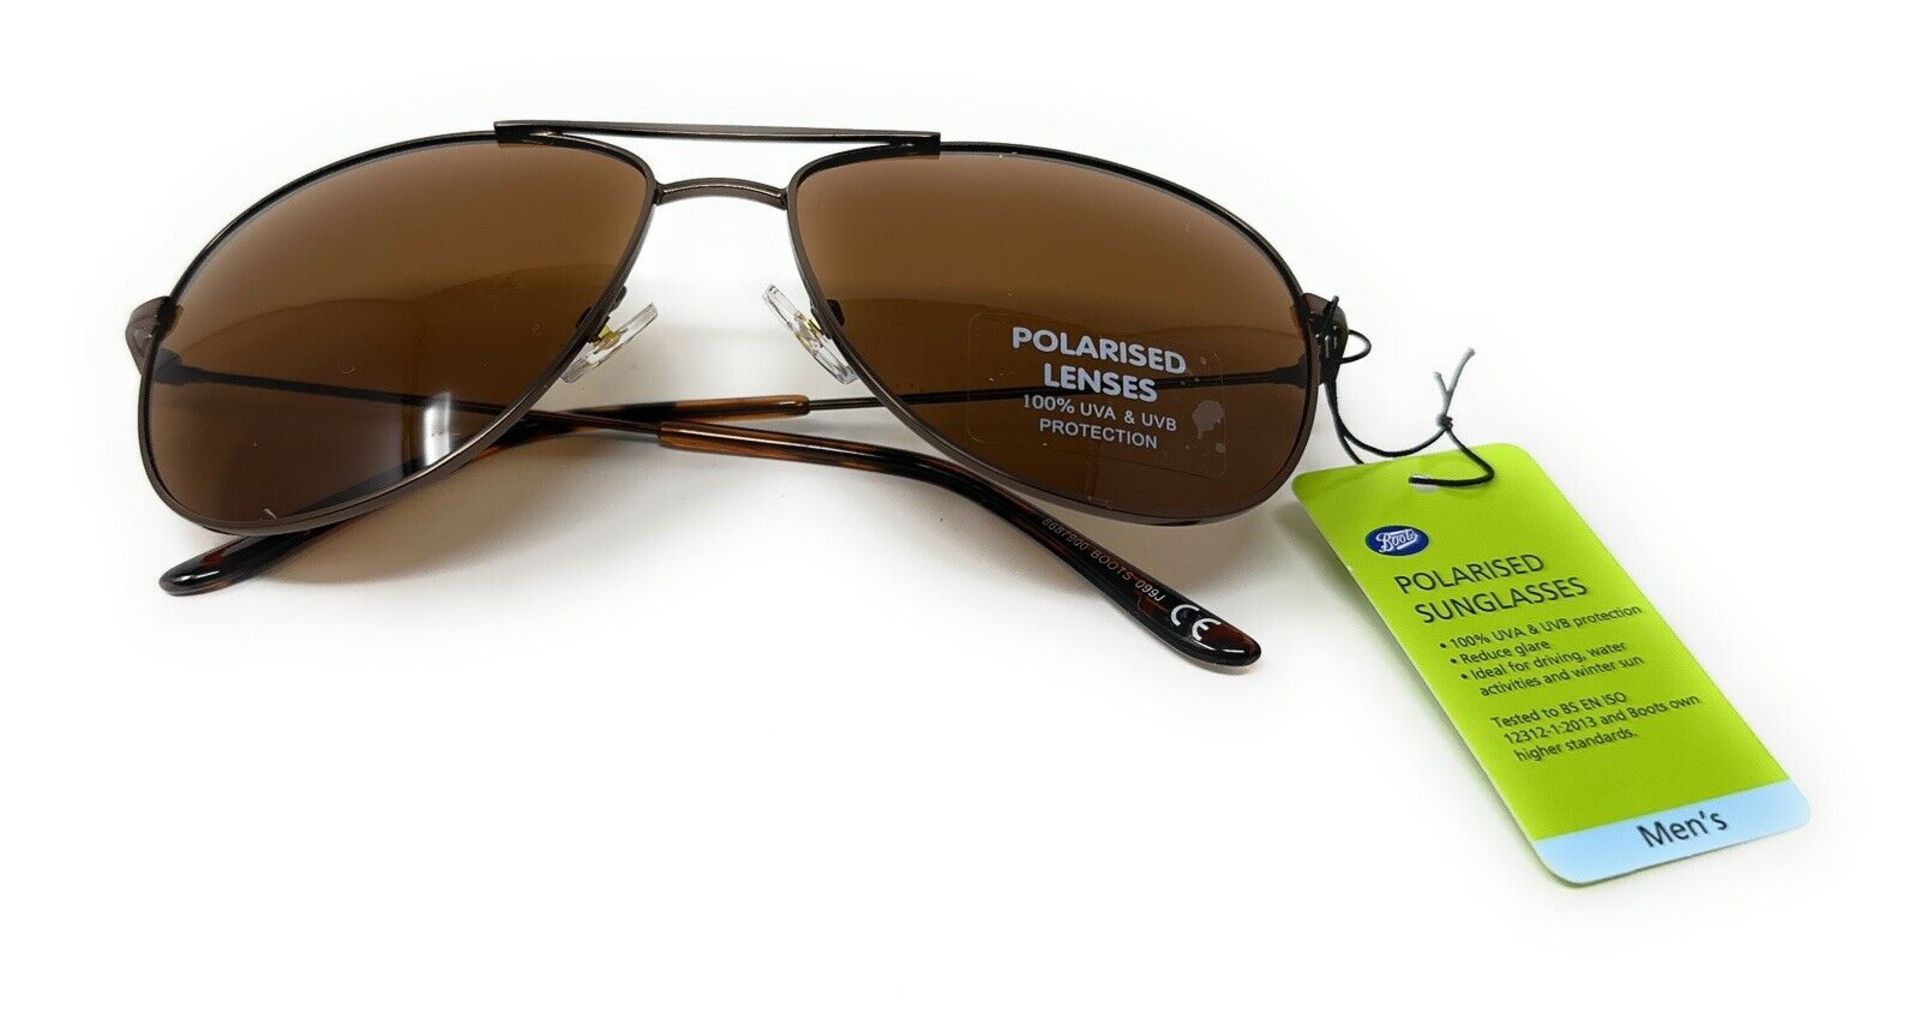 20 x Boots Polarised Lens Pilot Style Sunglasses 100% UVA - (NEW) - BOOTS RRP Â£660 !